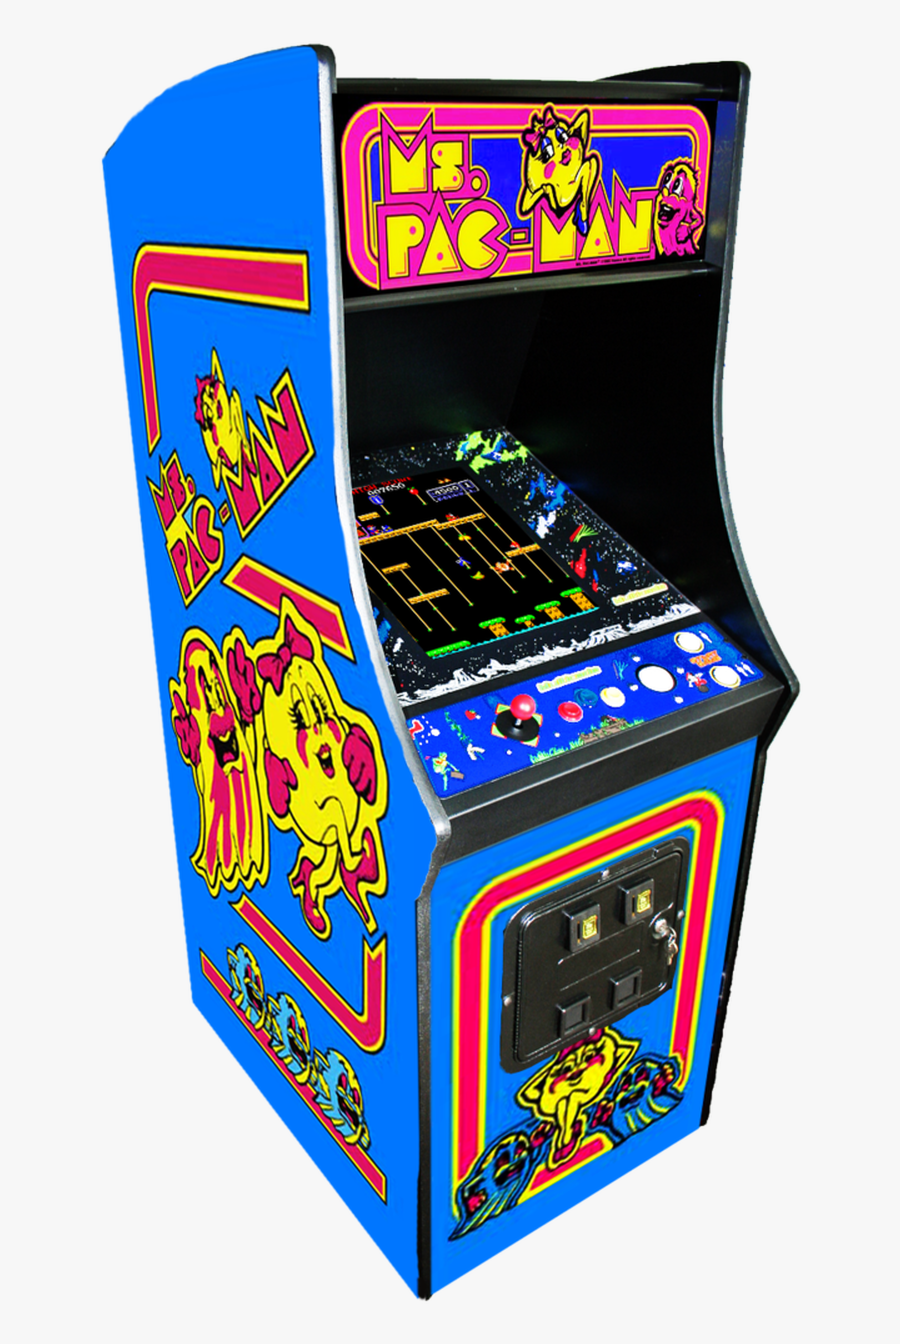 Friends игровой автомат. Аркадный автомат Пакмен. Игровой аппарат Pacman. Пакман игровой автомат 80 х. Игровой автомат Мисс Пакман.